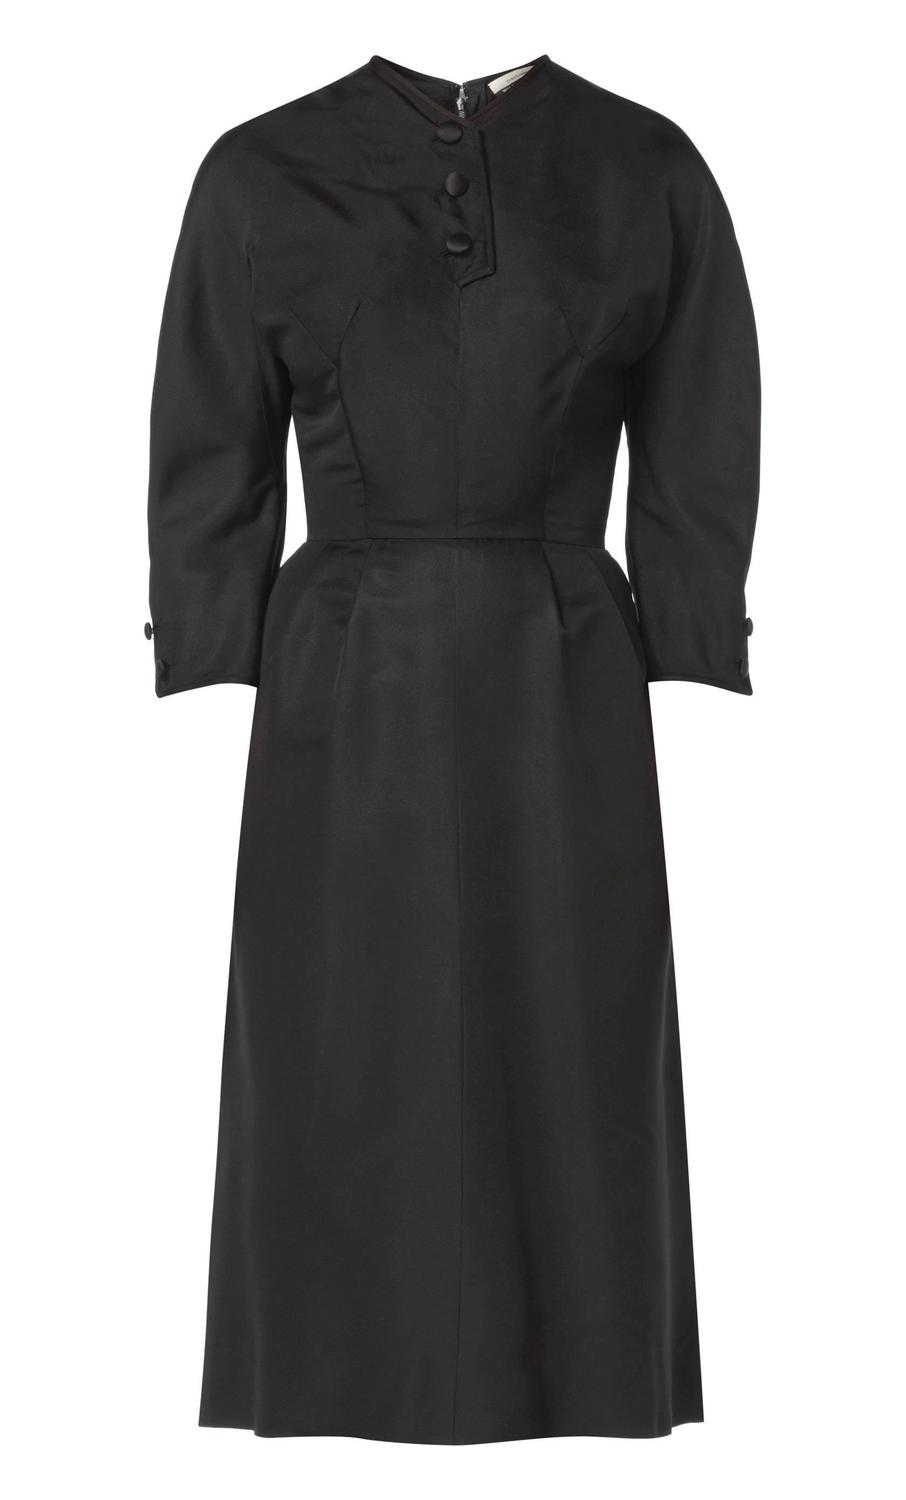 Hattie Carnegie black dress, circa 1963 For Sale at 1stdibs